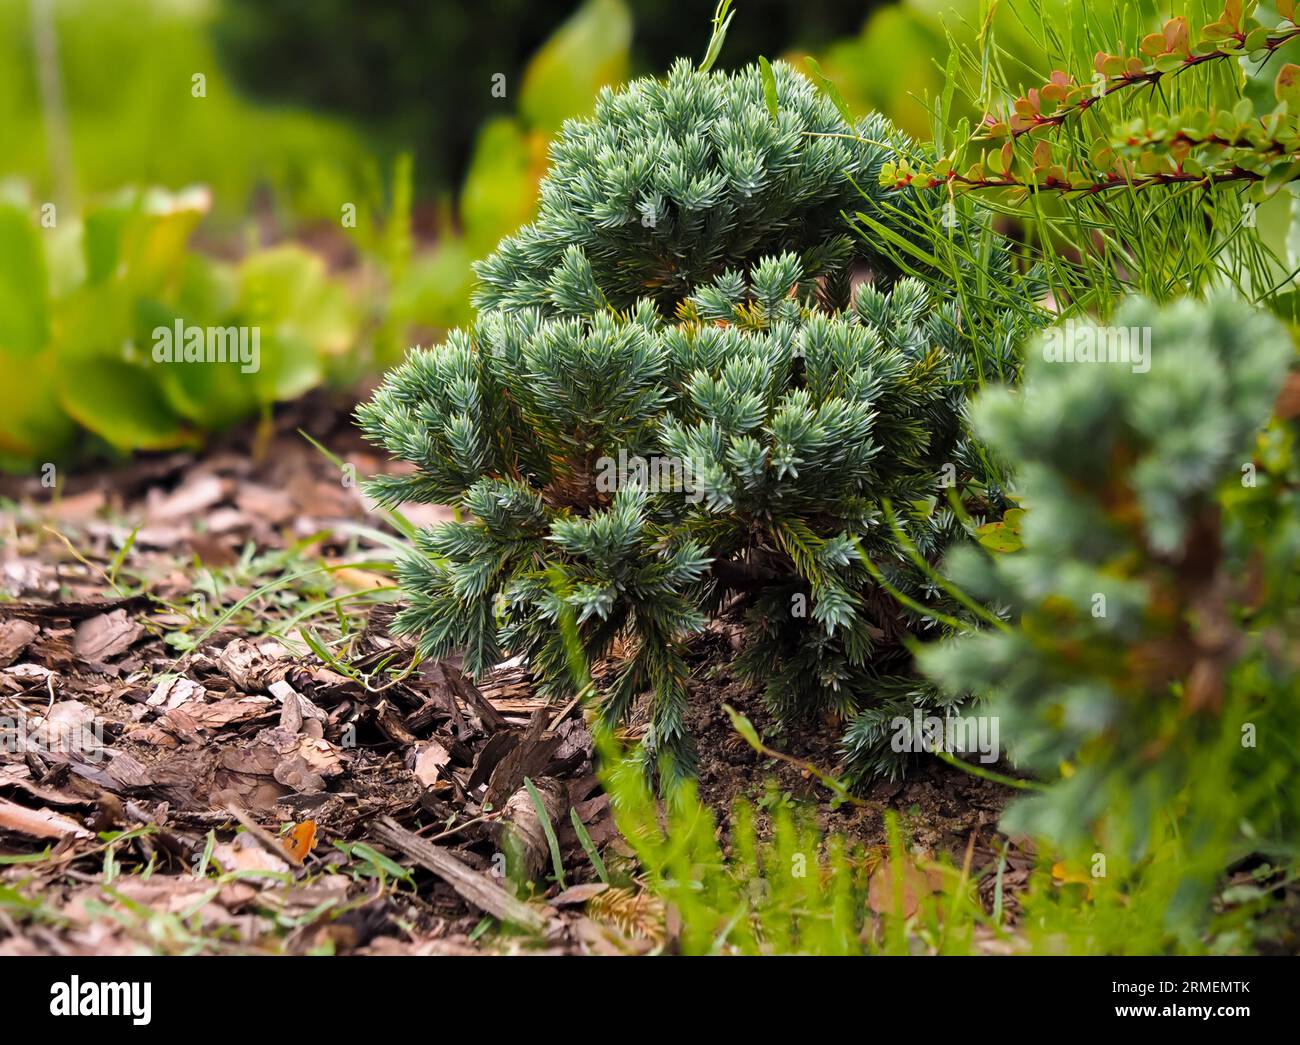 Juniperus squamata, conifer, evergreen plant, ornamental shrub in natural habitat close-up on, against other plants Stock Photo